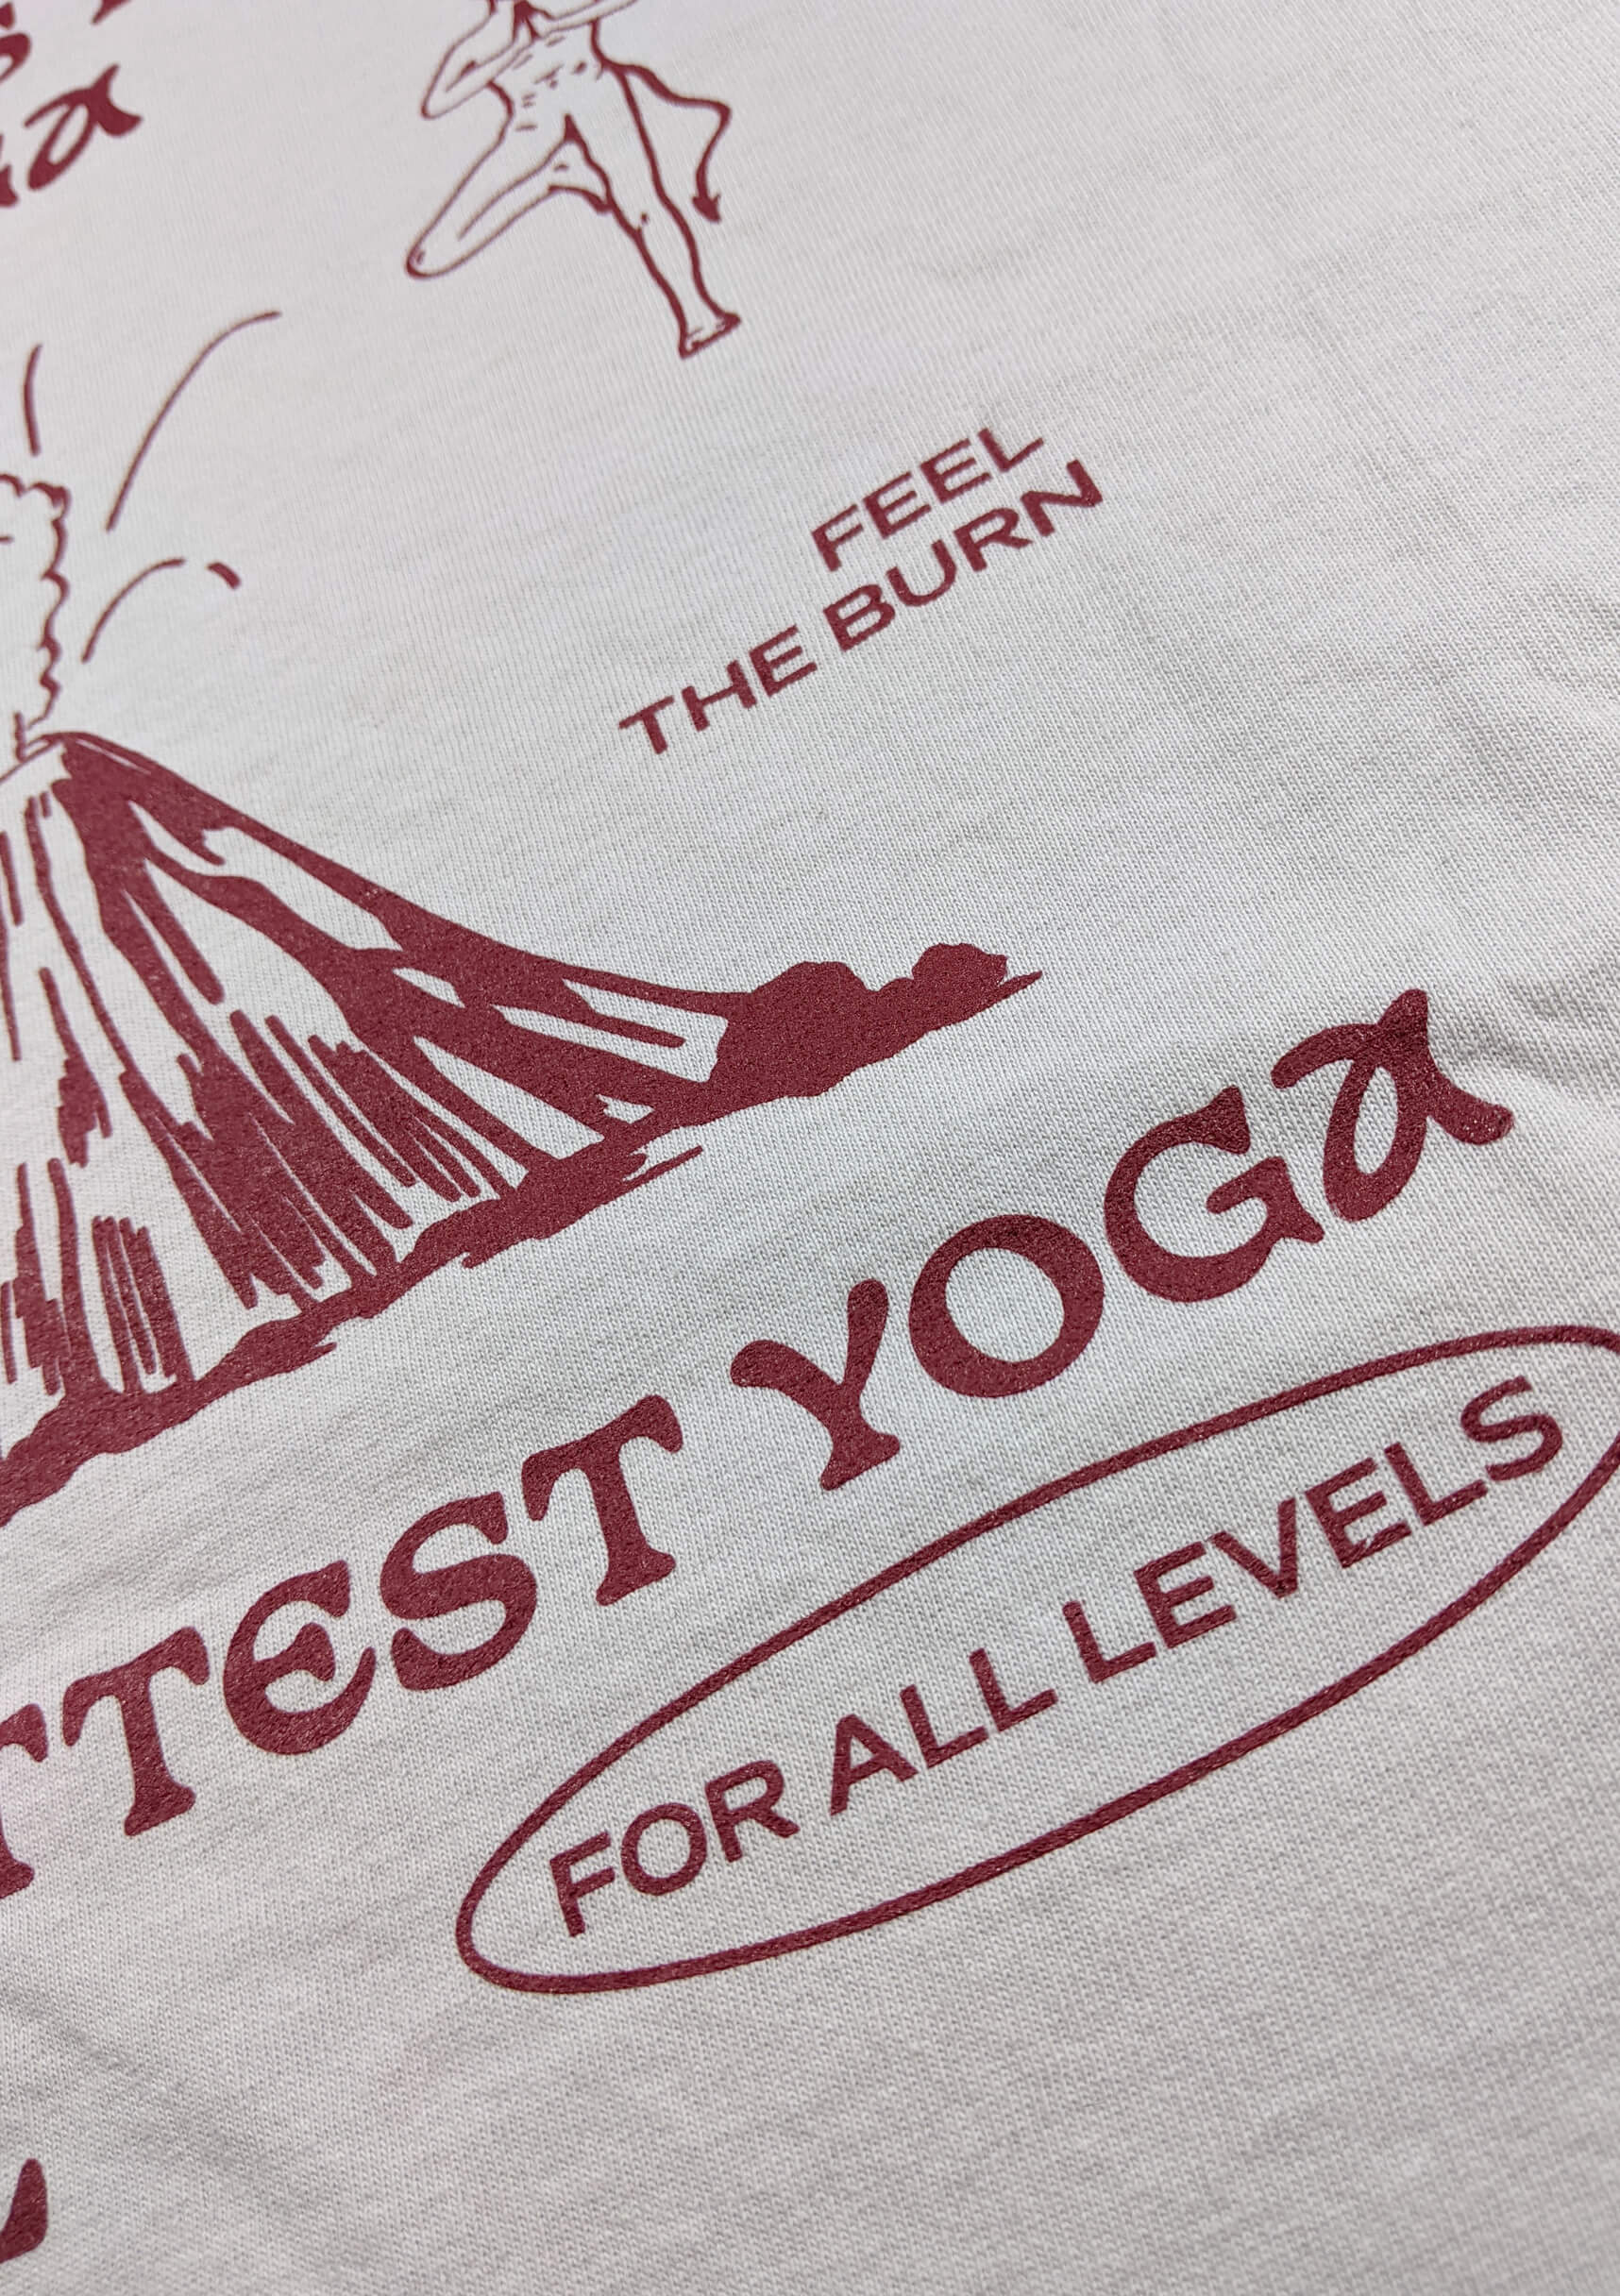 Tenue de yoga bikram - Tee shirt yoga femme bambou